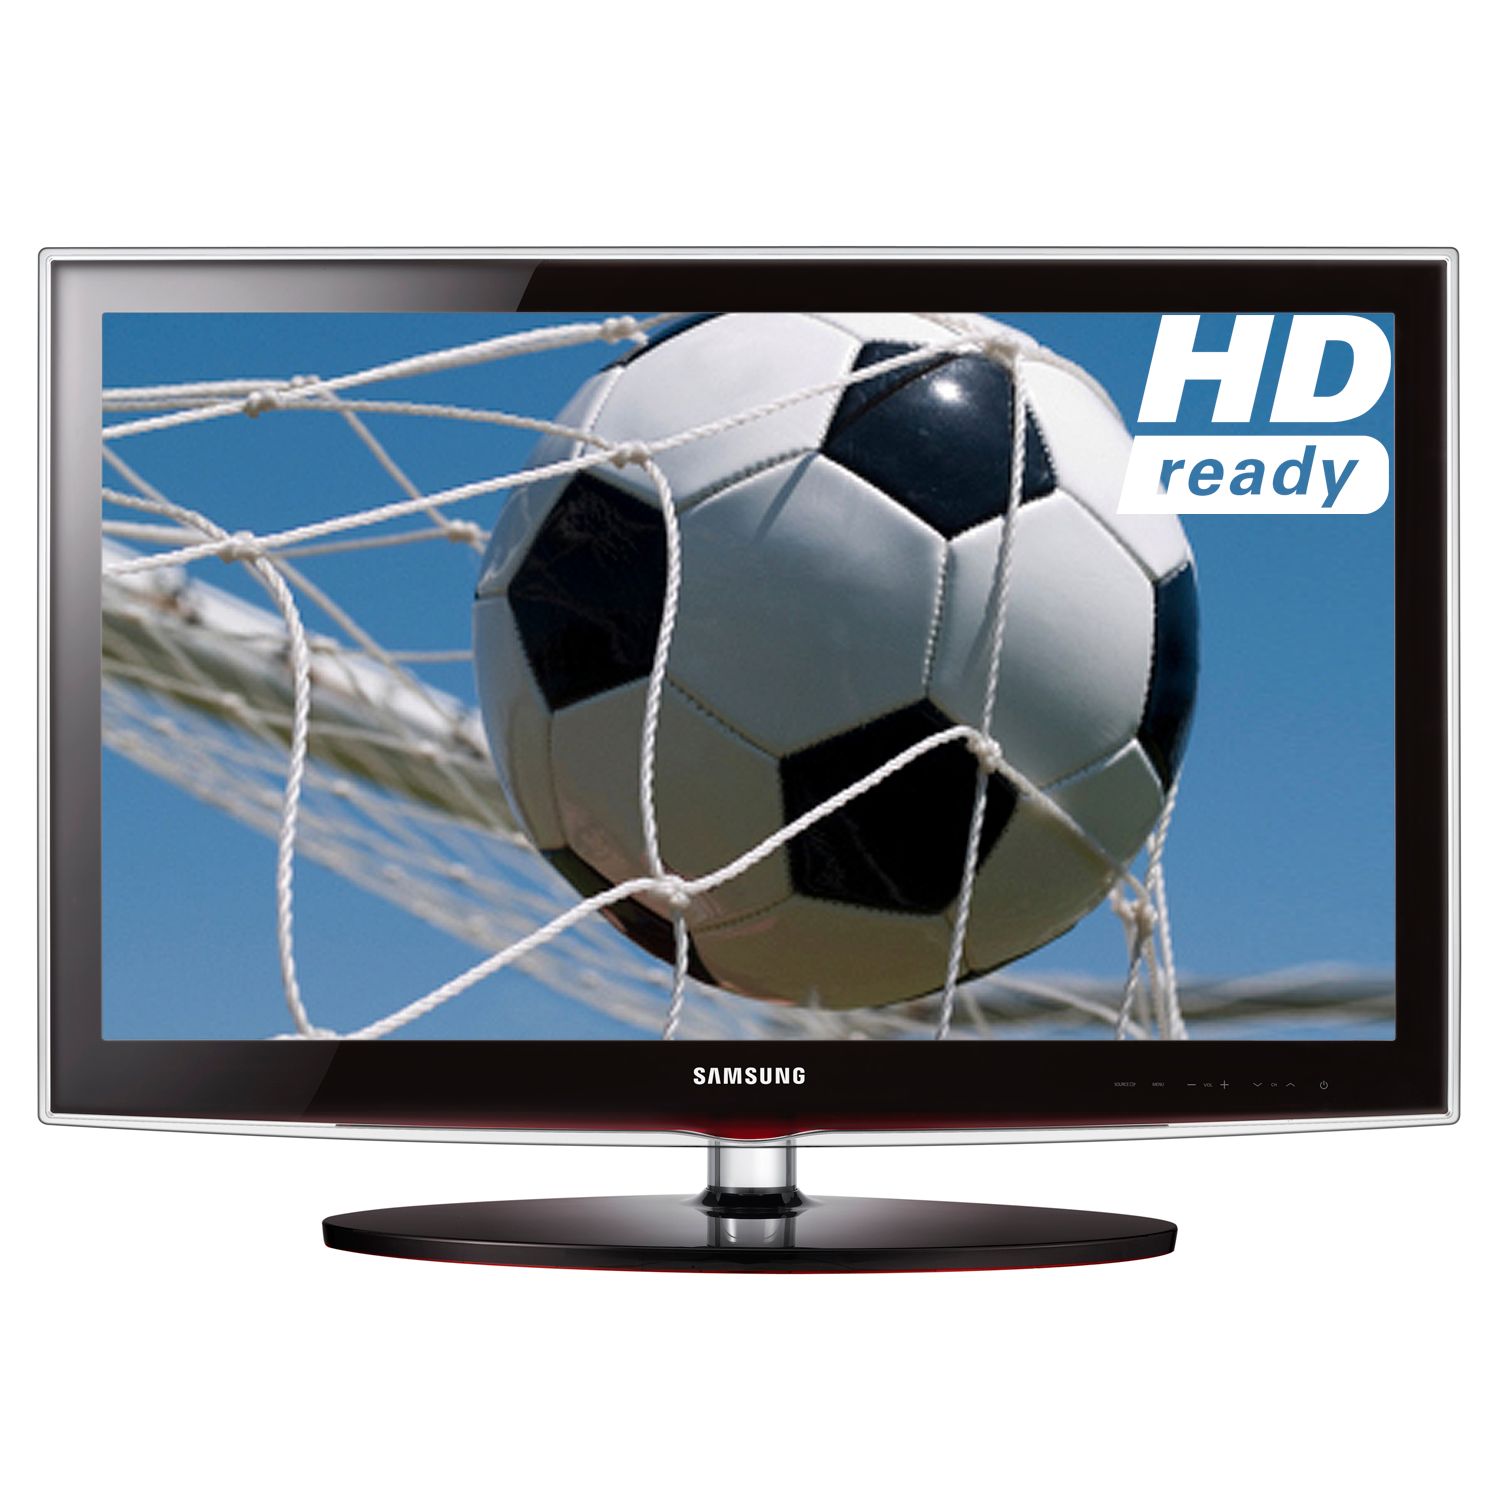 Samsung UE22C4000 LED HD Ready Digital Television, 22 Inch at JohnLewis